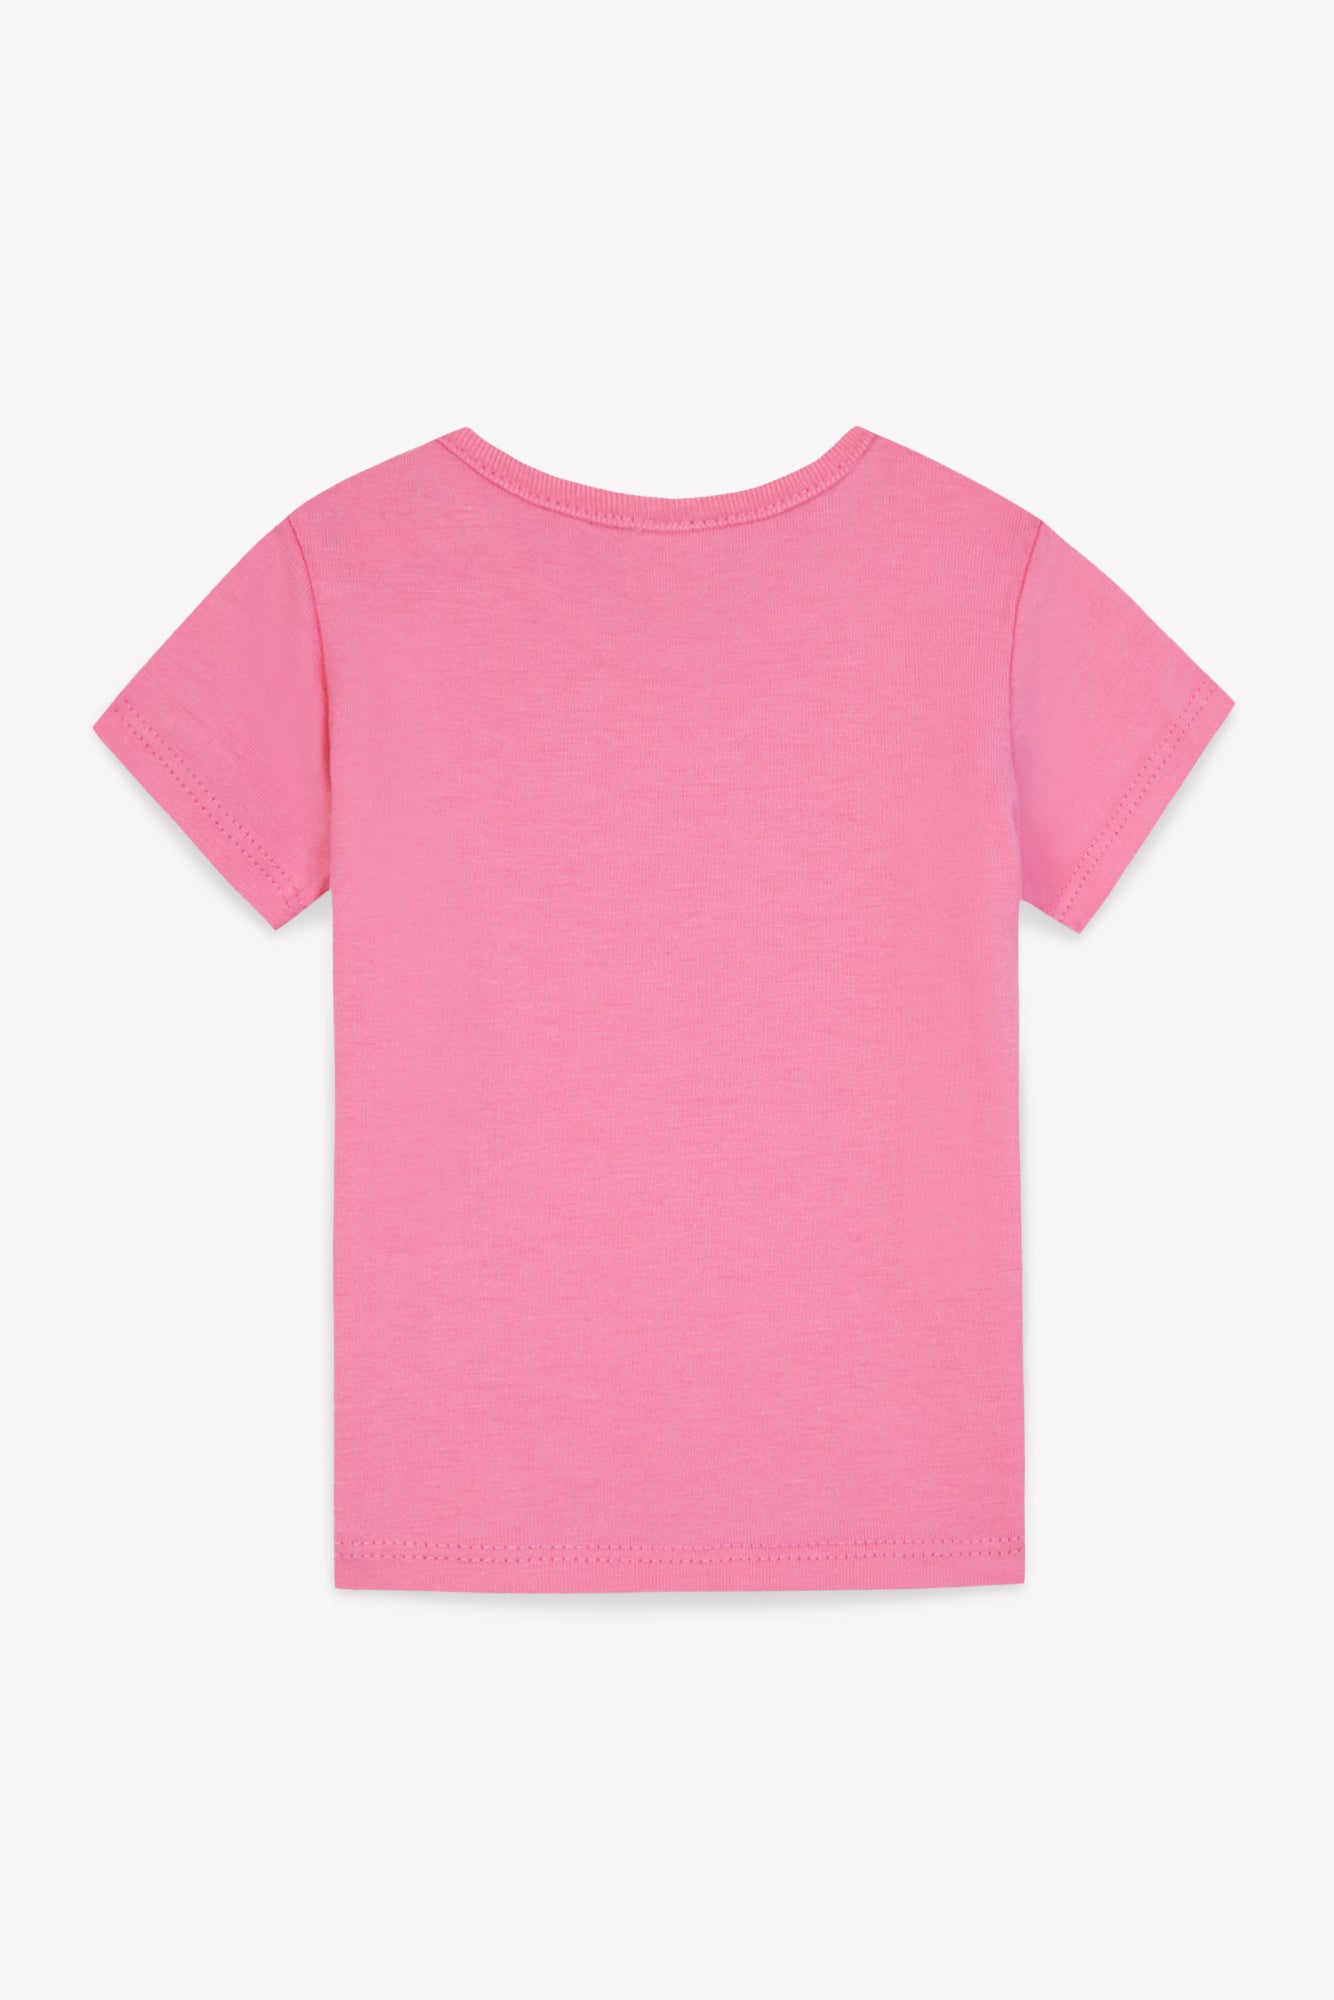 T-shirt - Tuba Pink Baby organic cotton Print